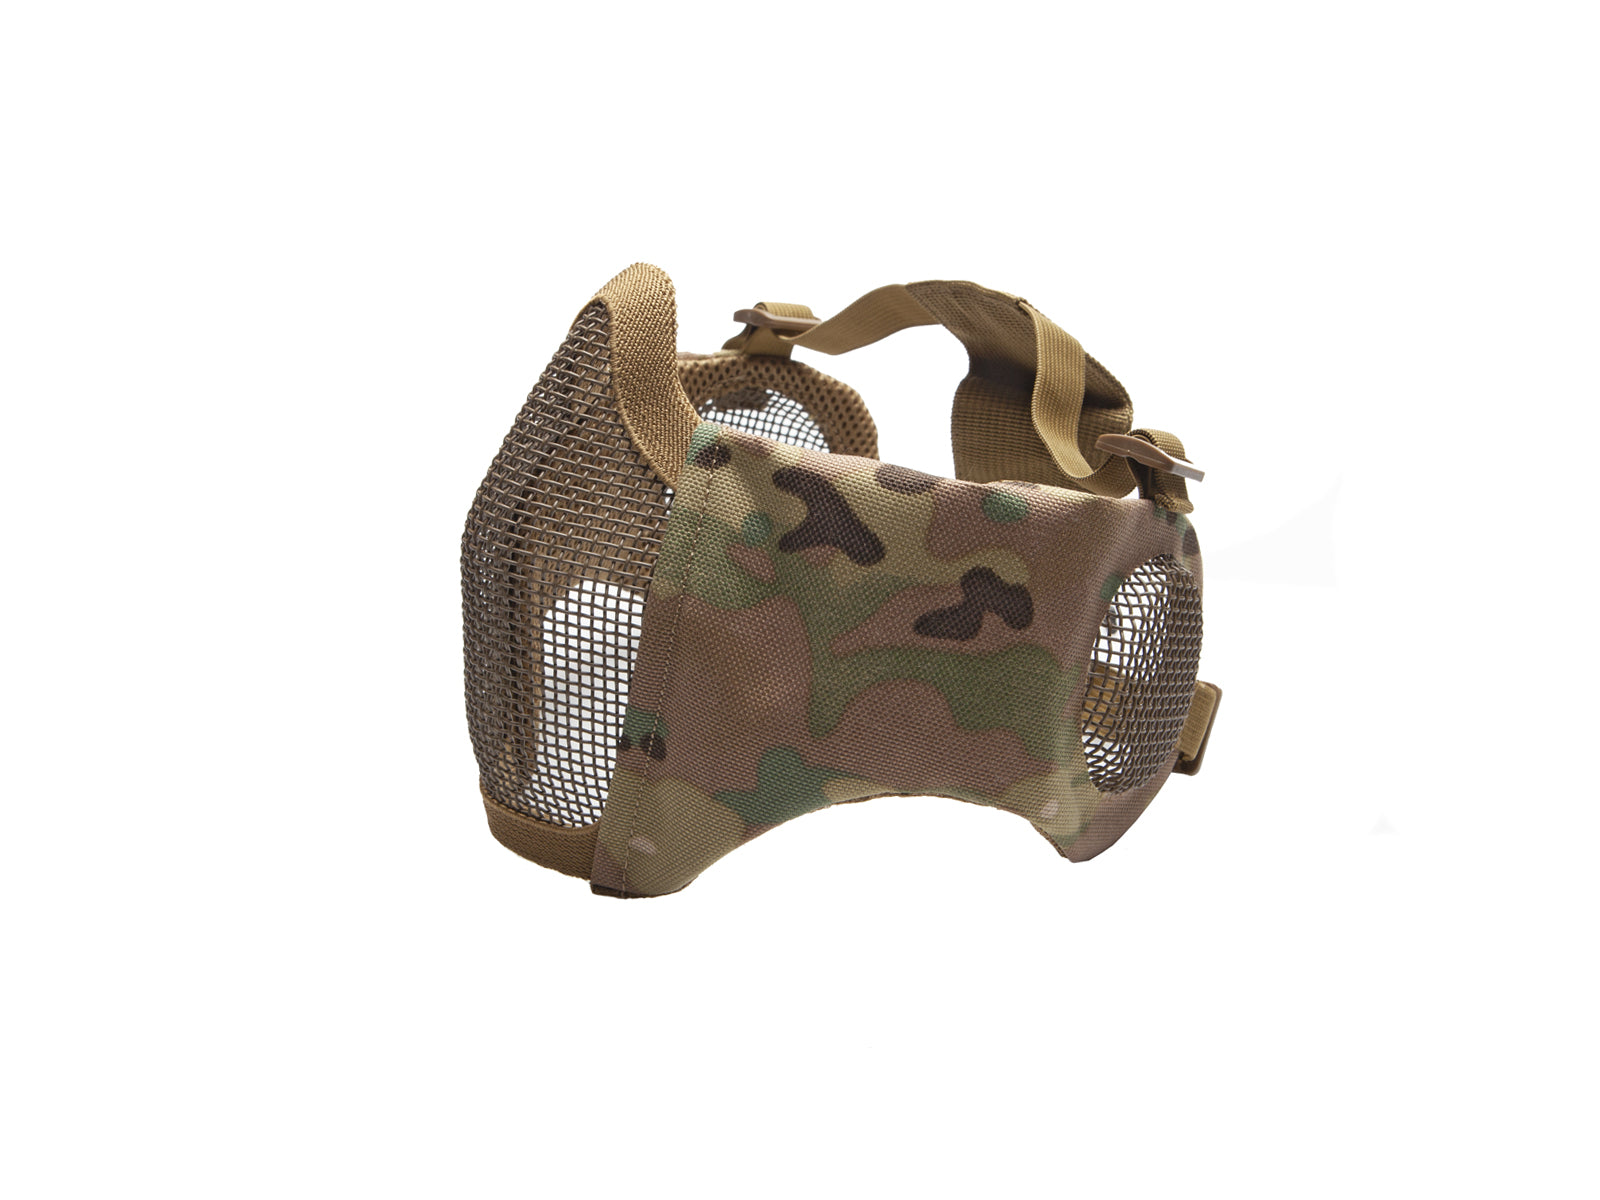 ASG Metal Mesh Airsoft Mask w/ Cheekpad & Ear Protection – Multicam